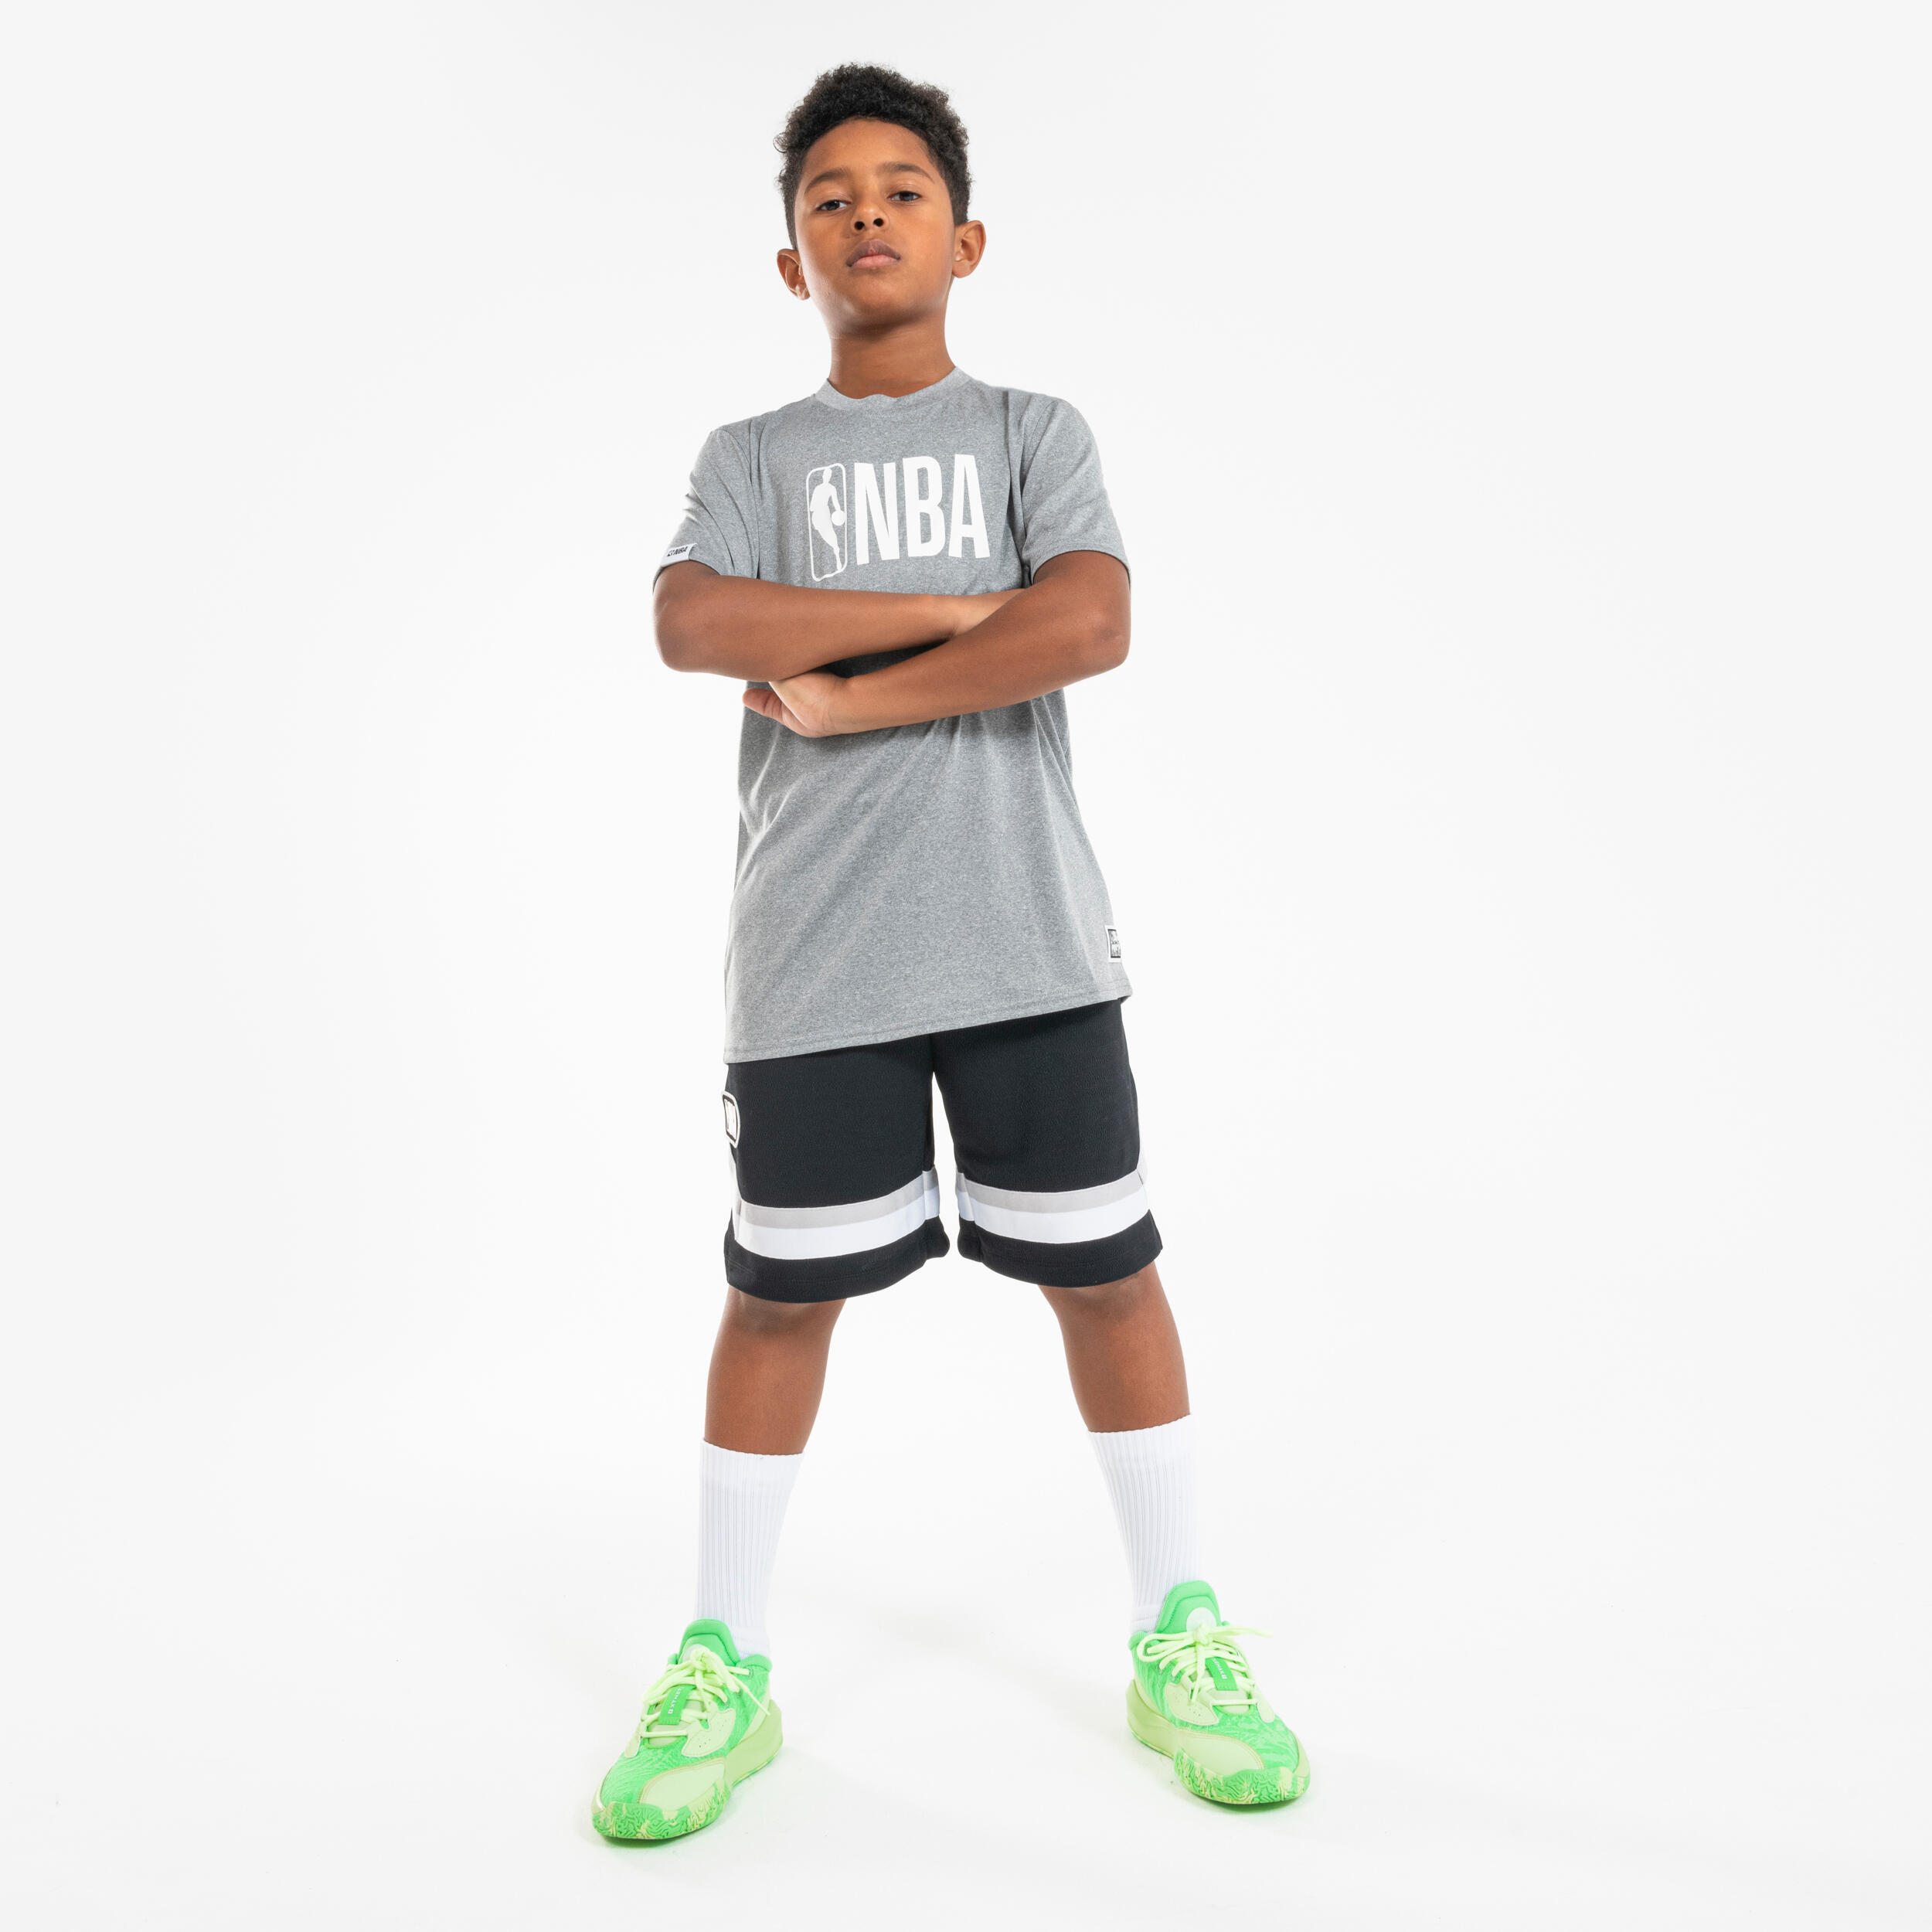 Kids' Basketball Shoes Fast 900 Low-1 - NBA Celtics/Green 10/10